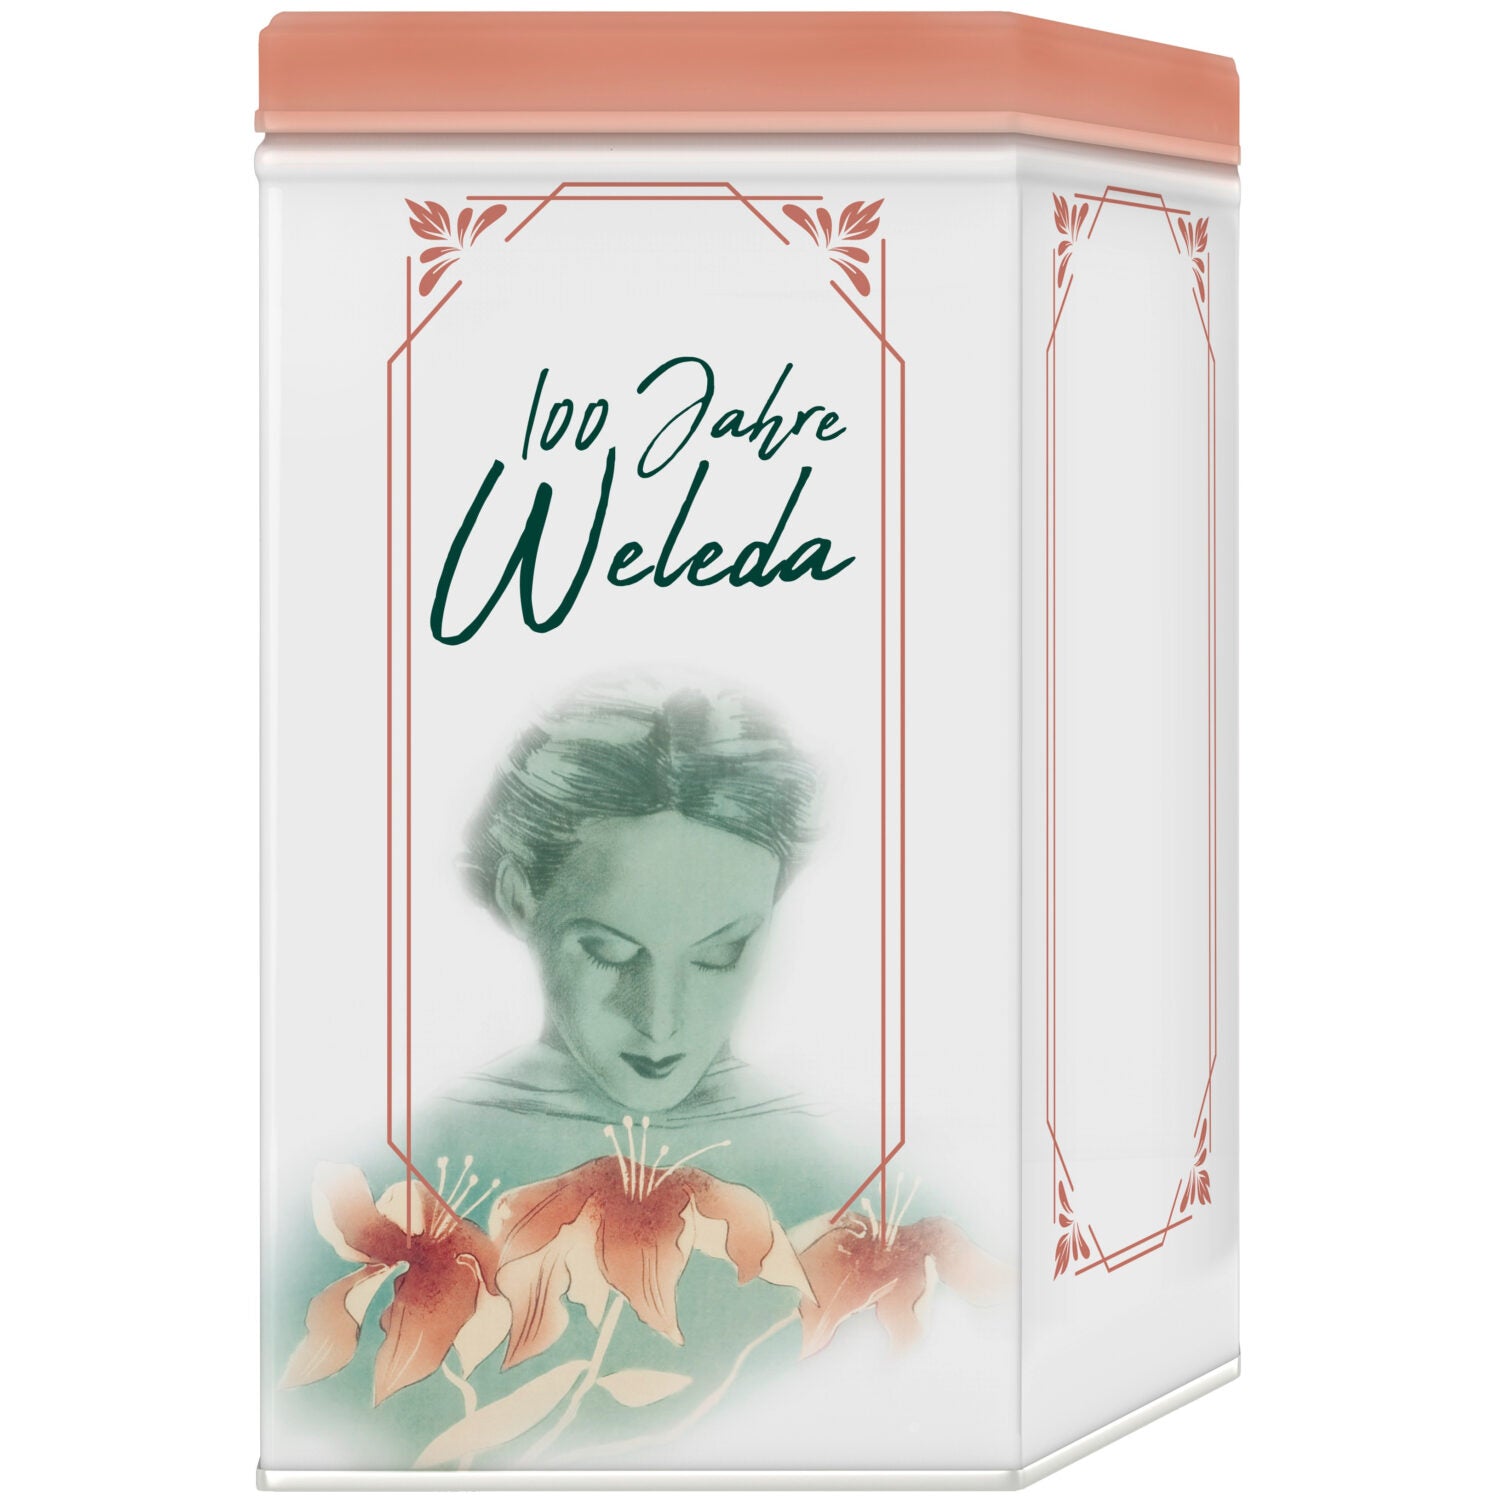 Weleda Geschenkset 100 Jahre Weleda